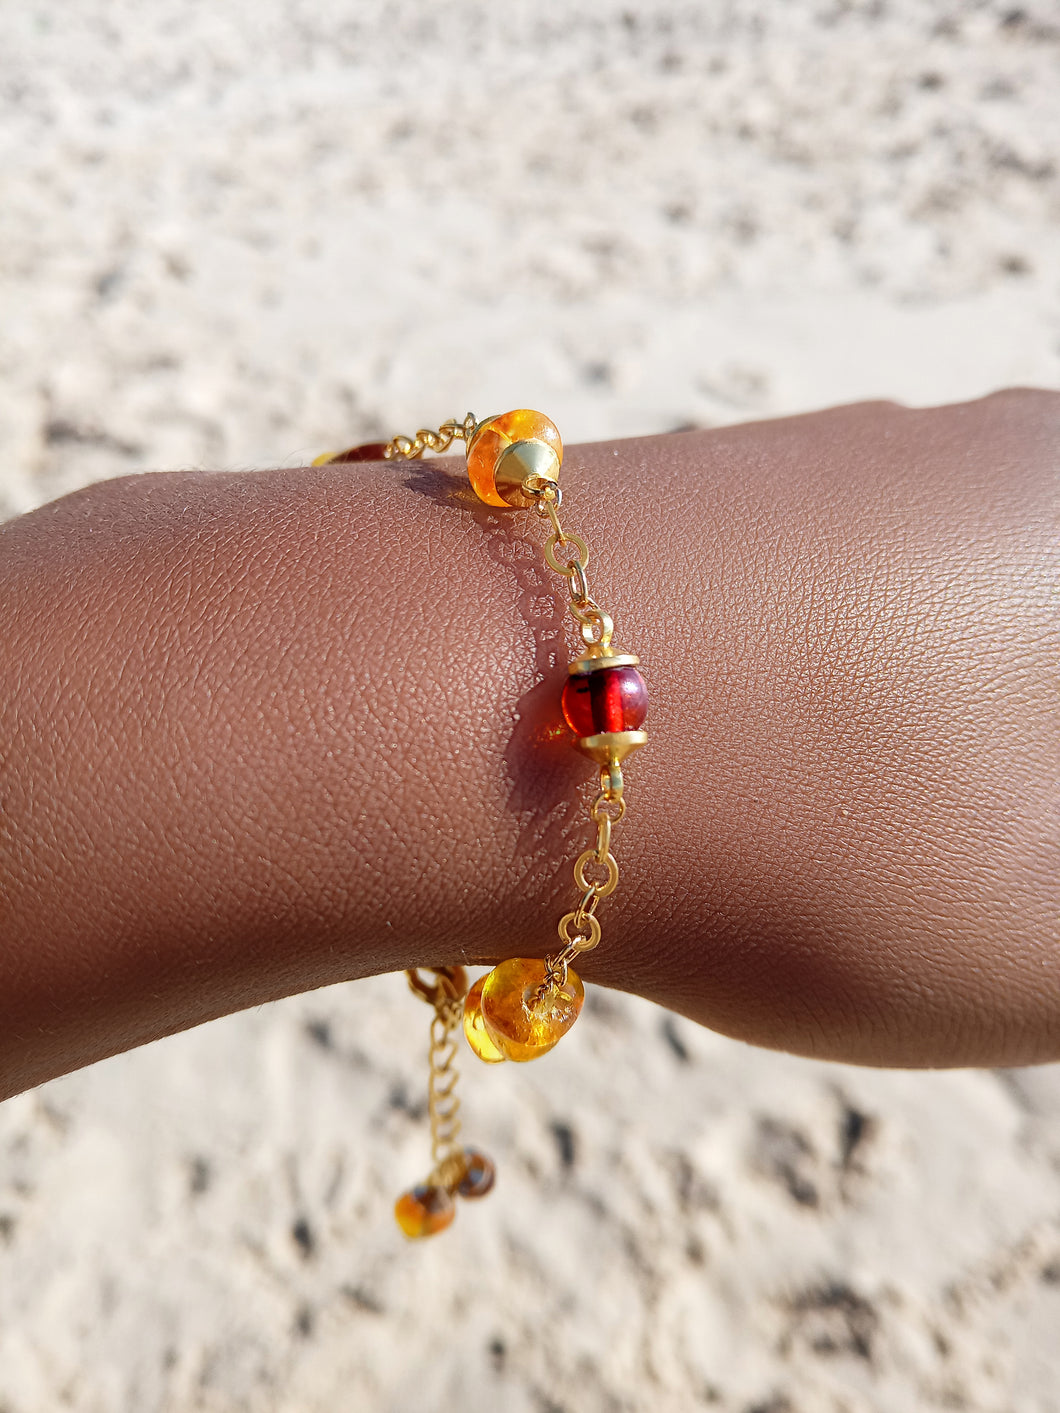 Make it rain bracelet on the beach by Marie France Design